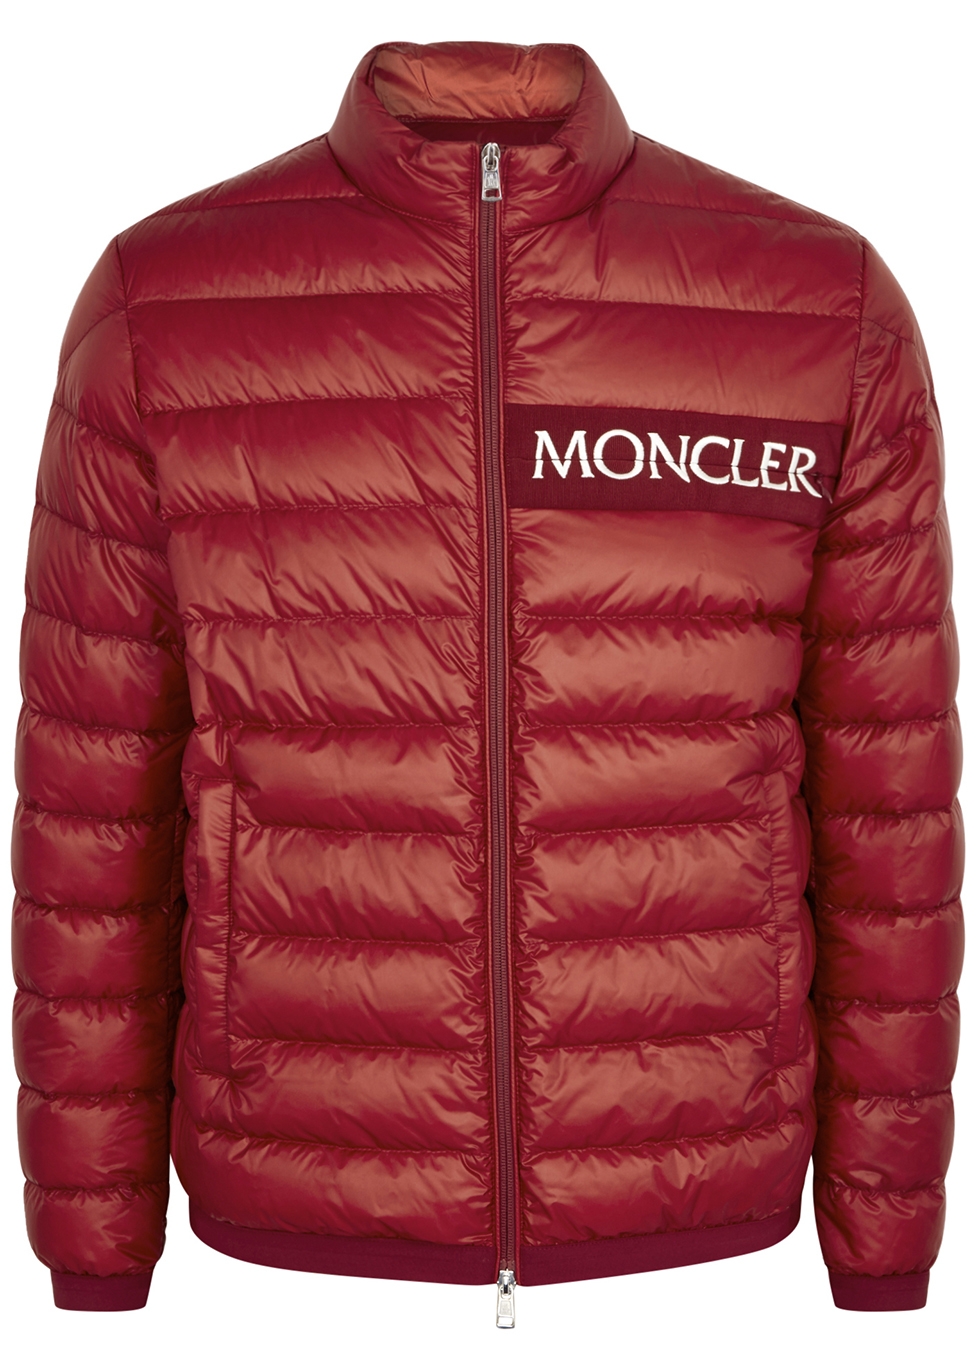 moncler coat harvey nichols